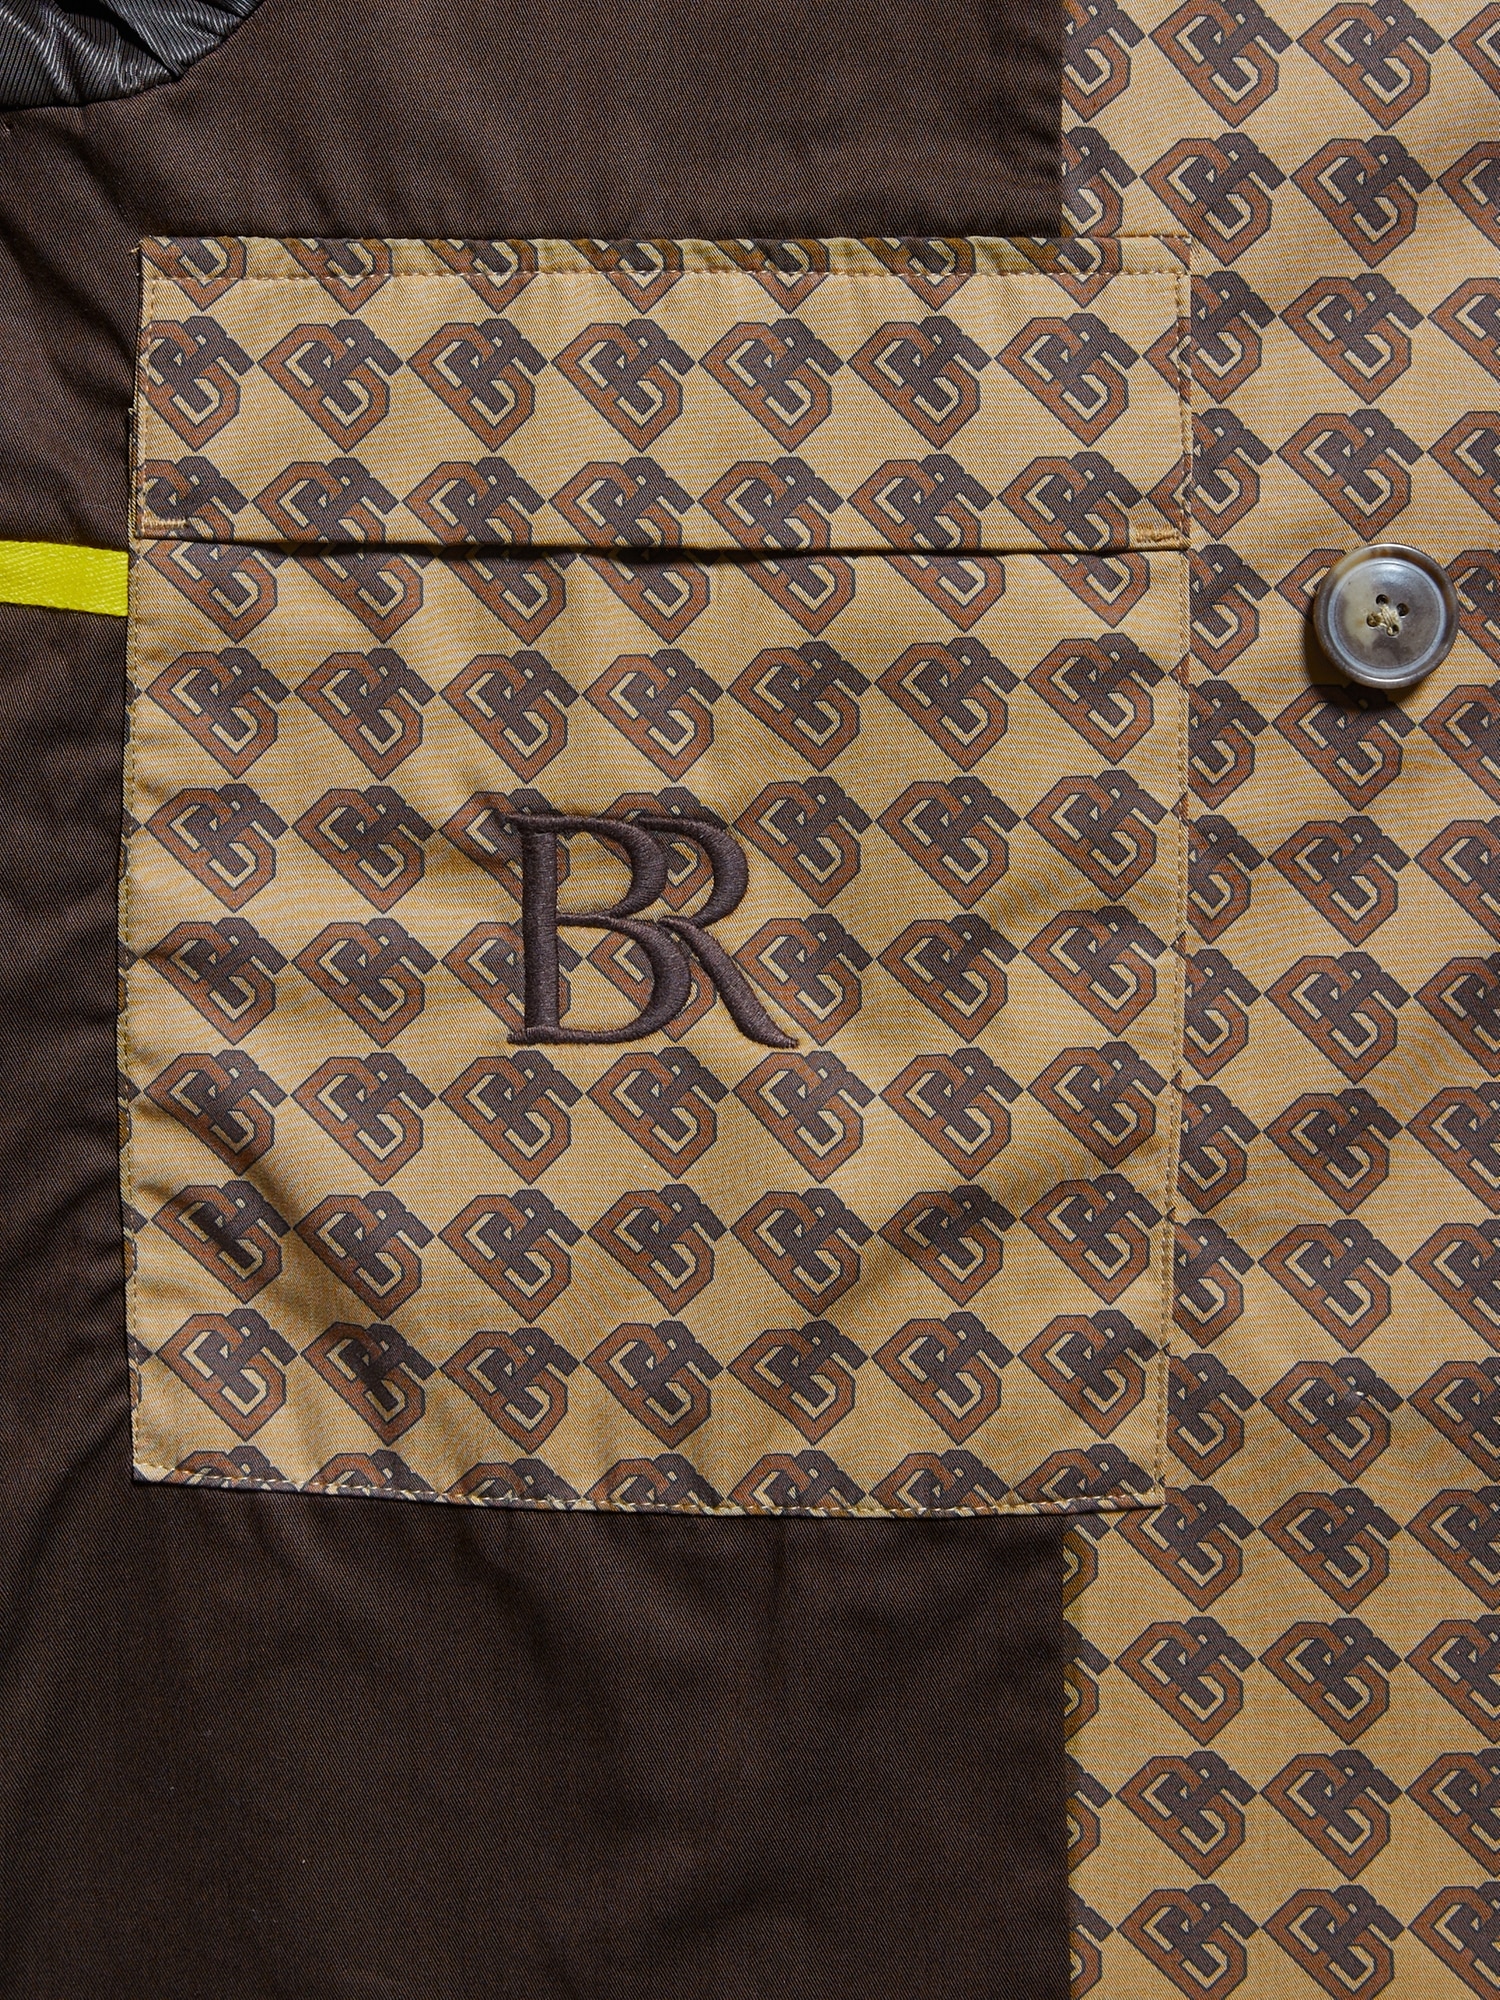 LOUIS VUITTON Vintage Monogram Logo Trench Coat Jacket 36 